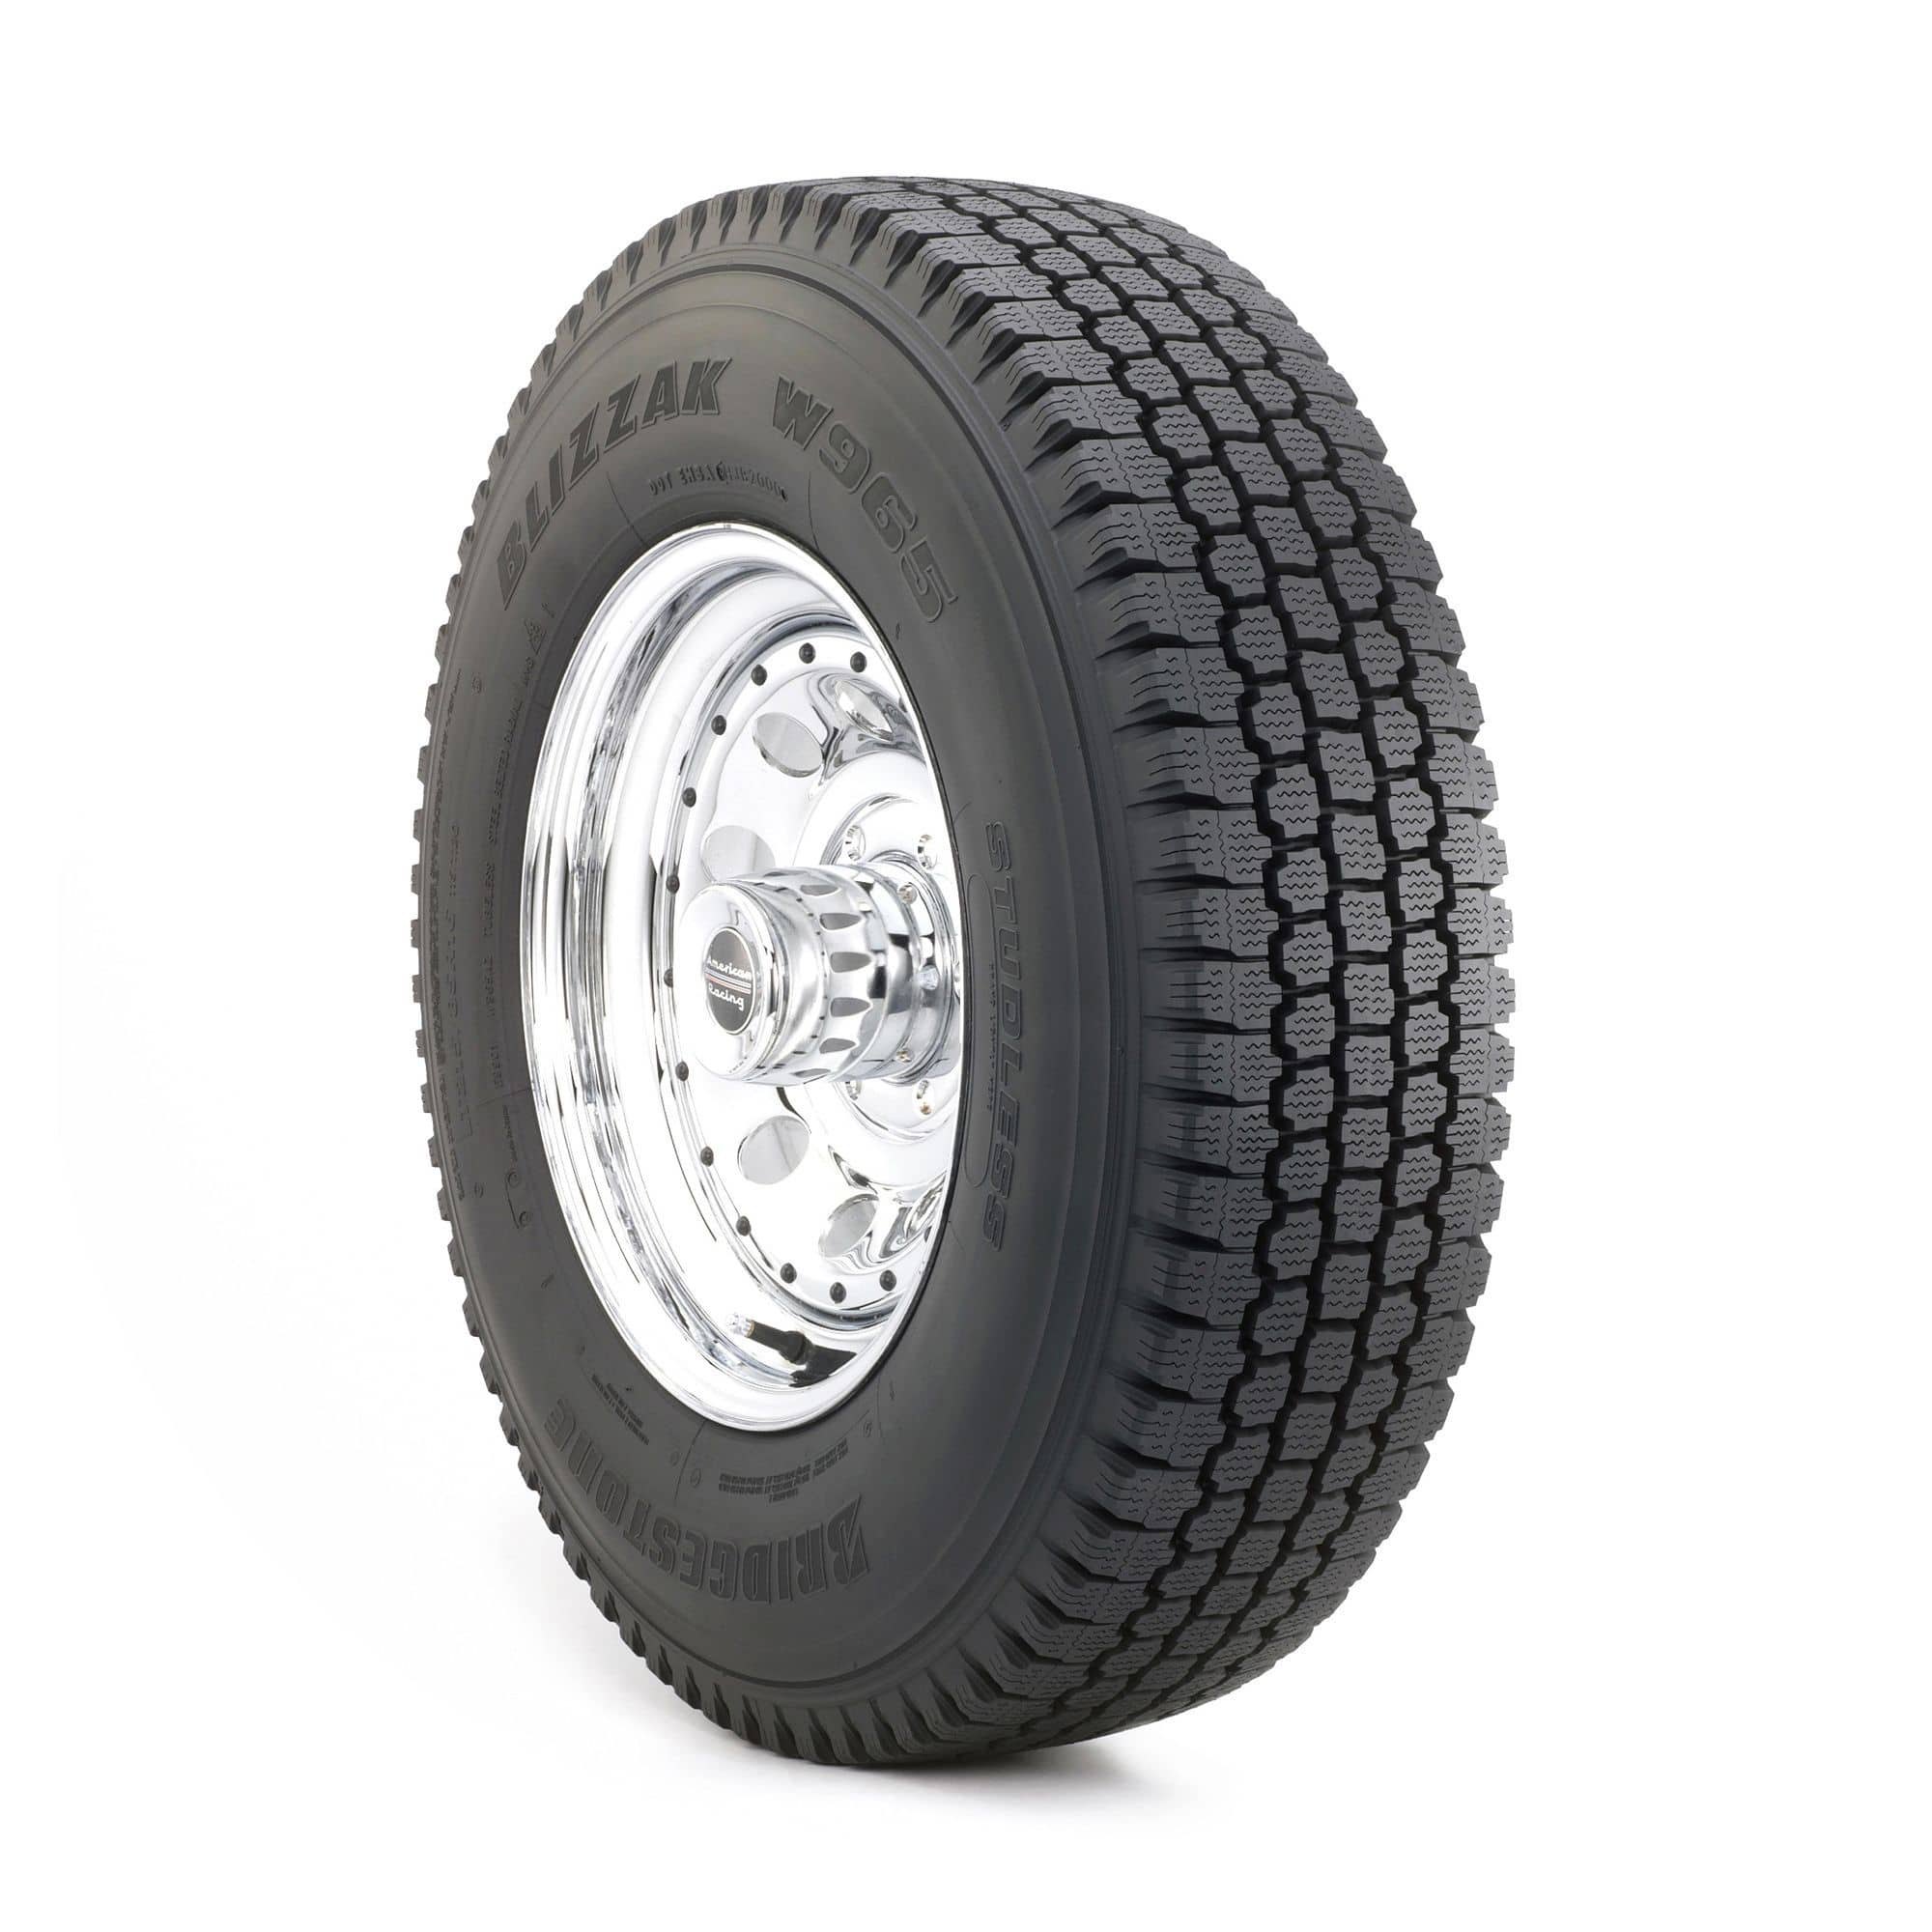 Bridgestone Blizzak W965 Winter Tire For Truck u0026 SUV | Canadian Tire